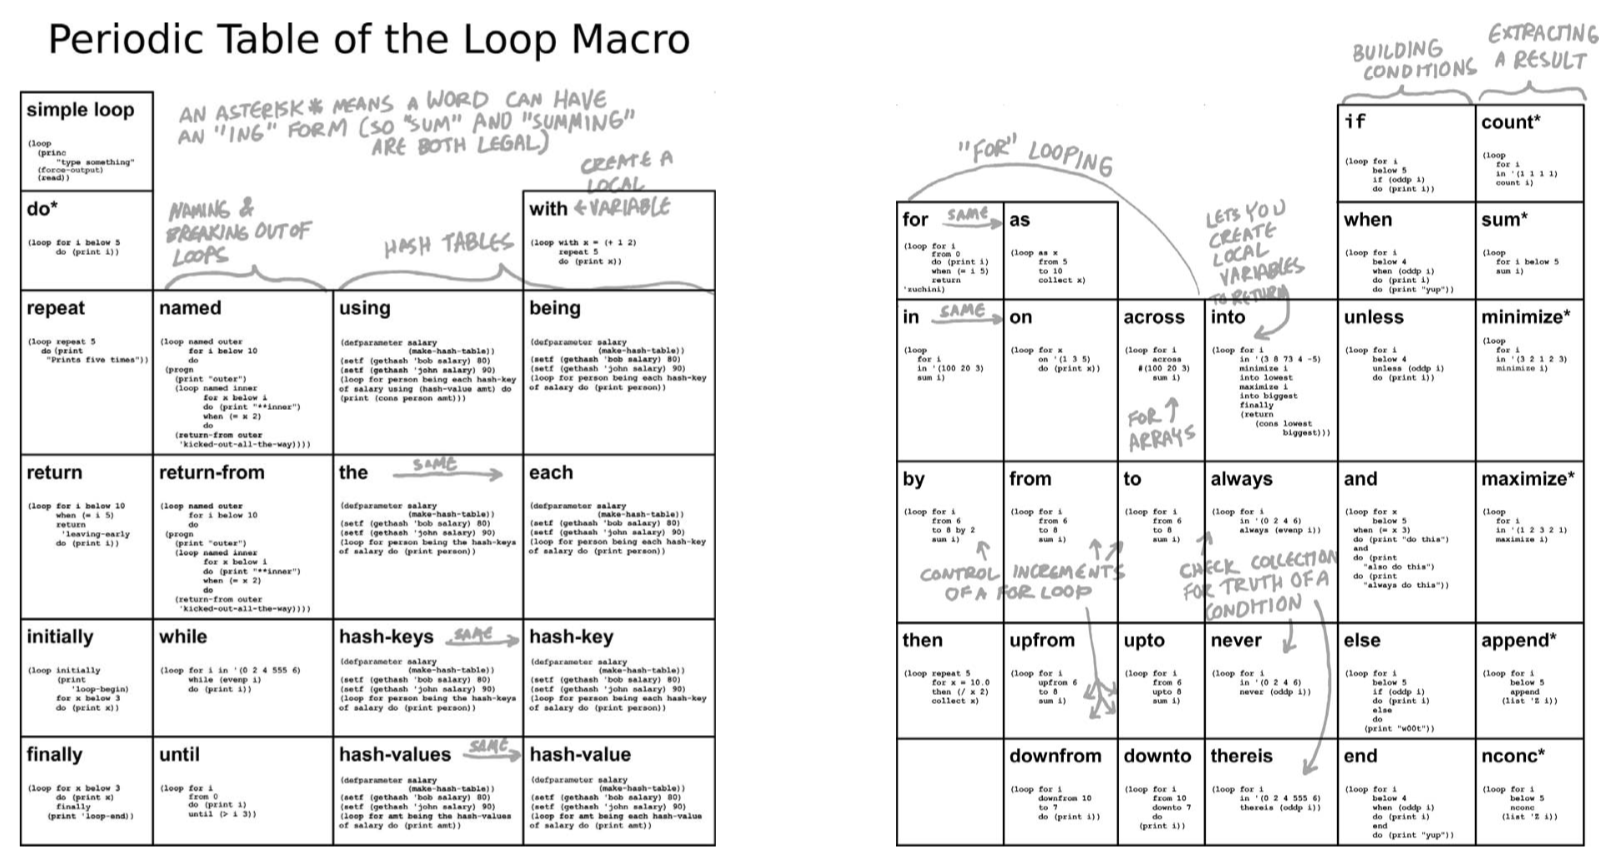 Periodic Table of the Loop Macro